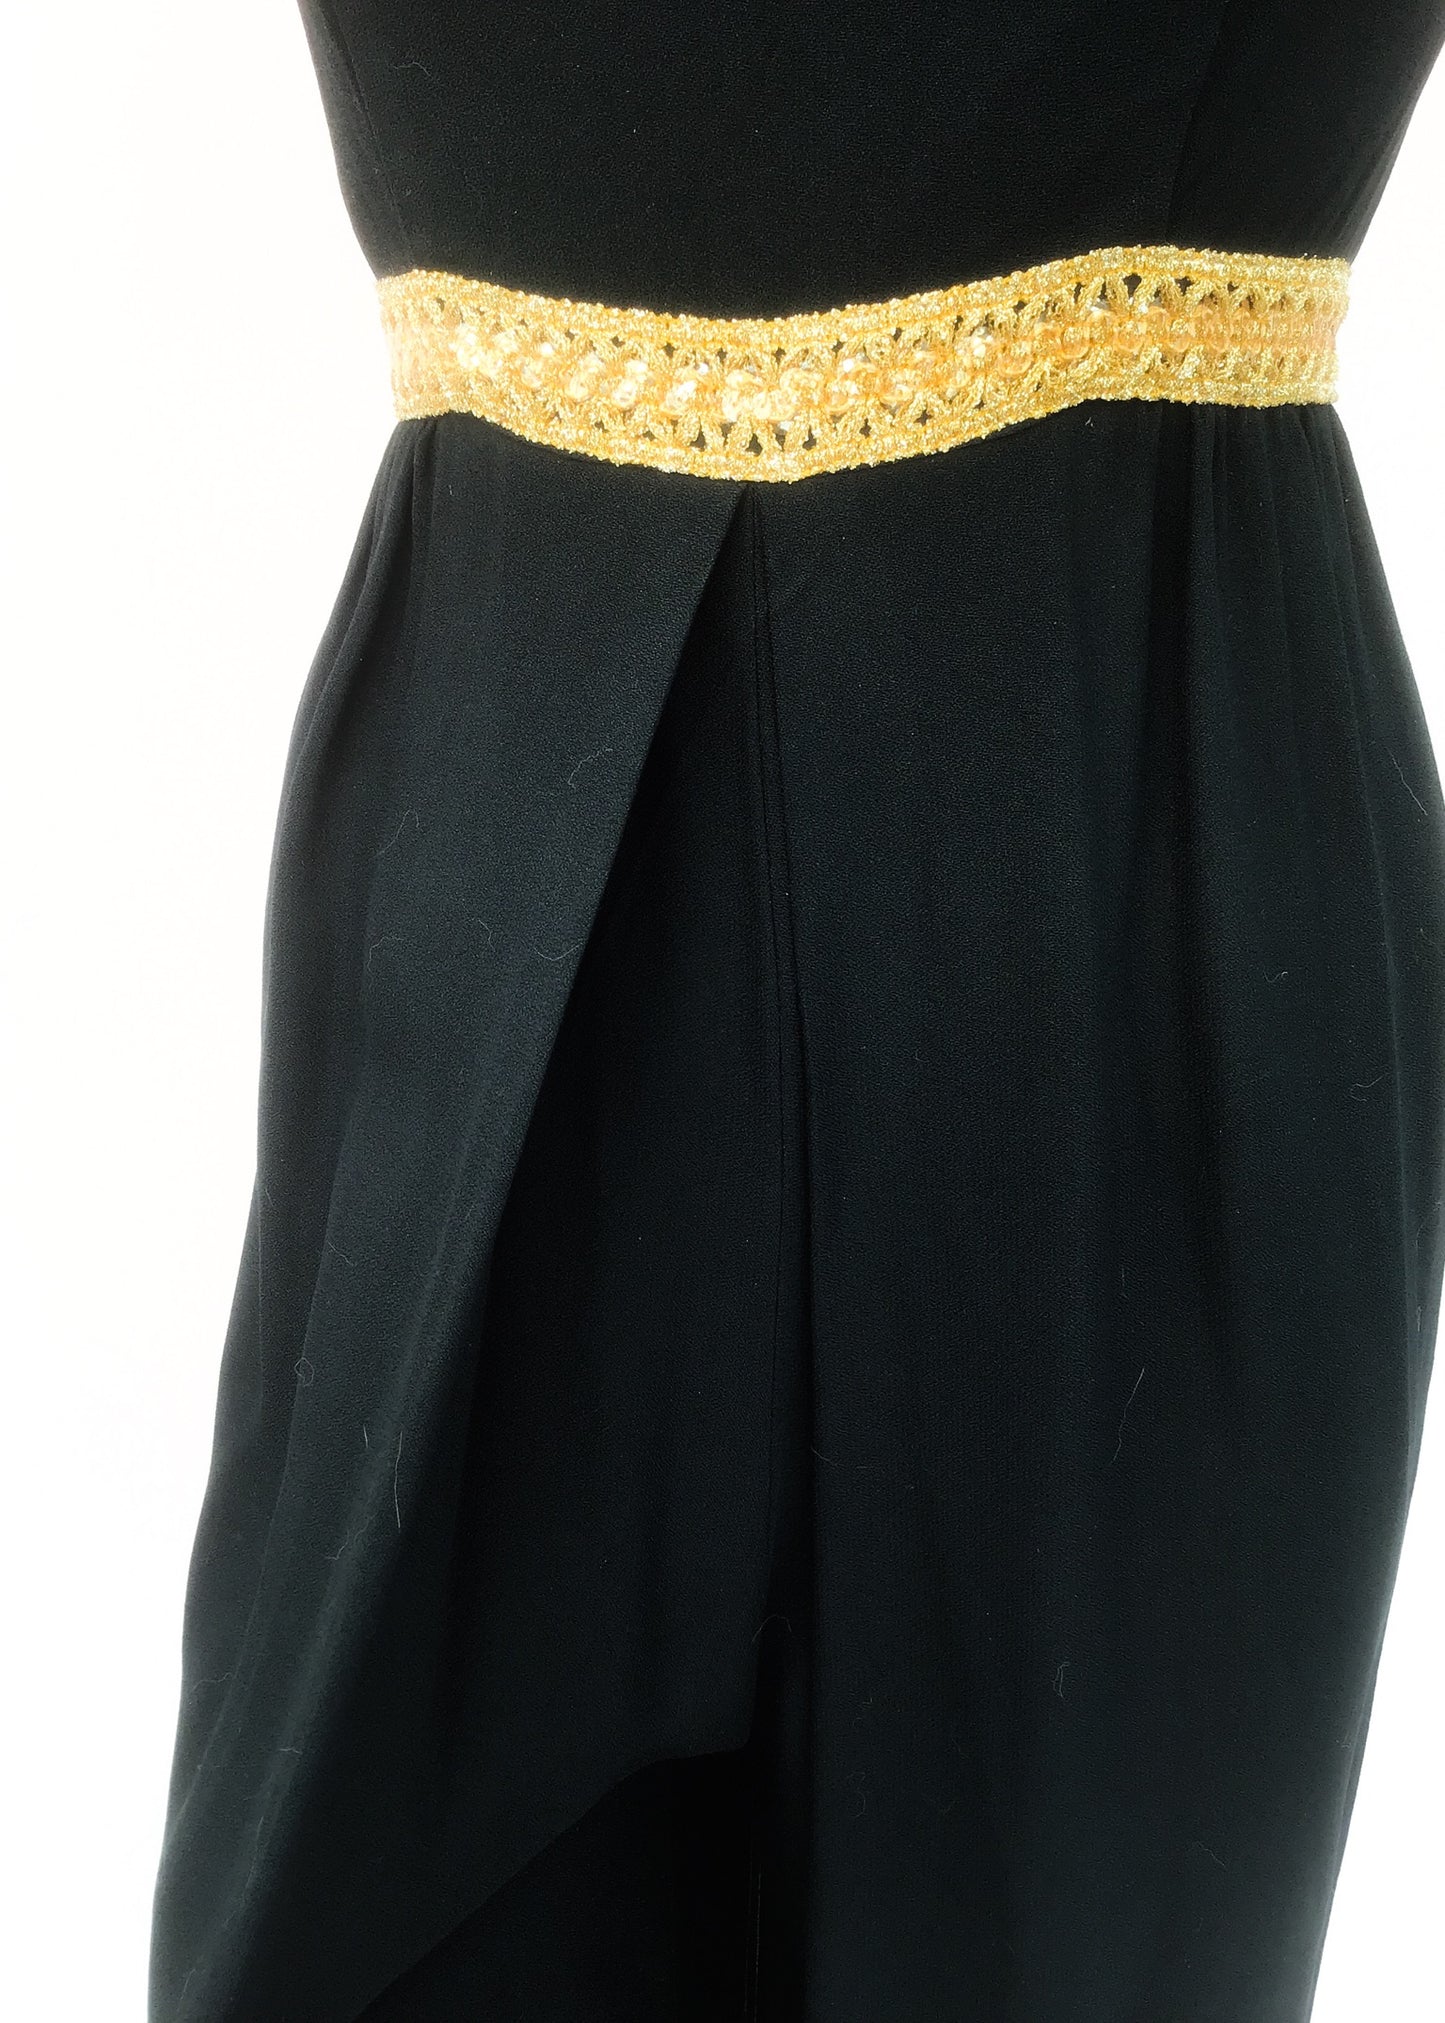 1960s Vintage Black & Gold Sleeveless Crepe Culottes Jump Suit • UK size 10 • Disco